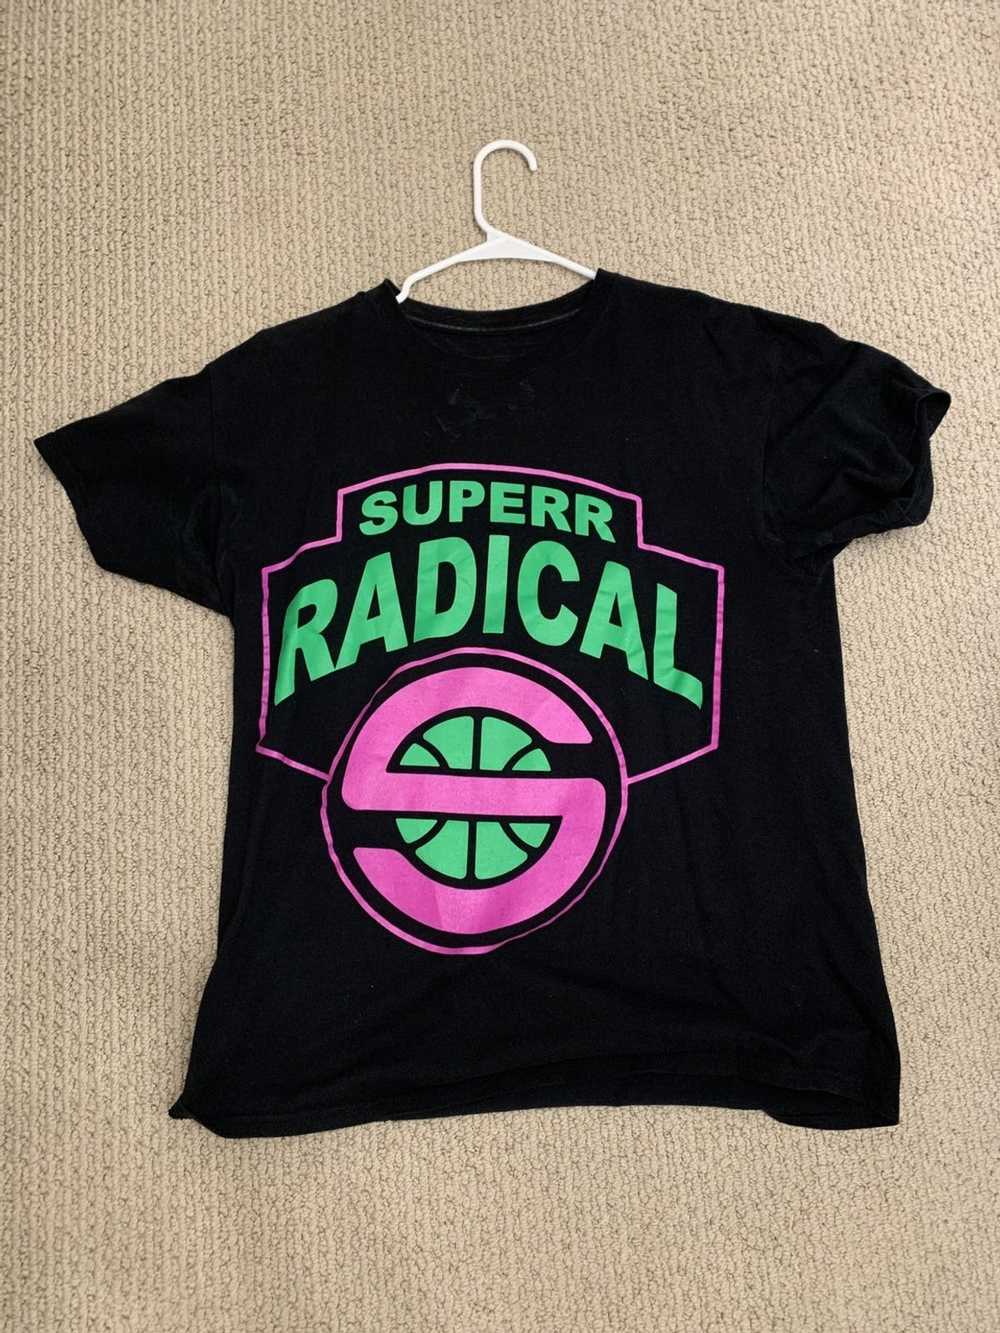 Superrradical superrradical T-Shirt - image 1